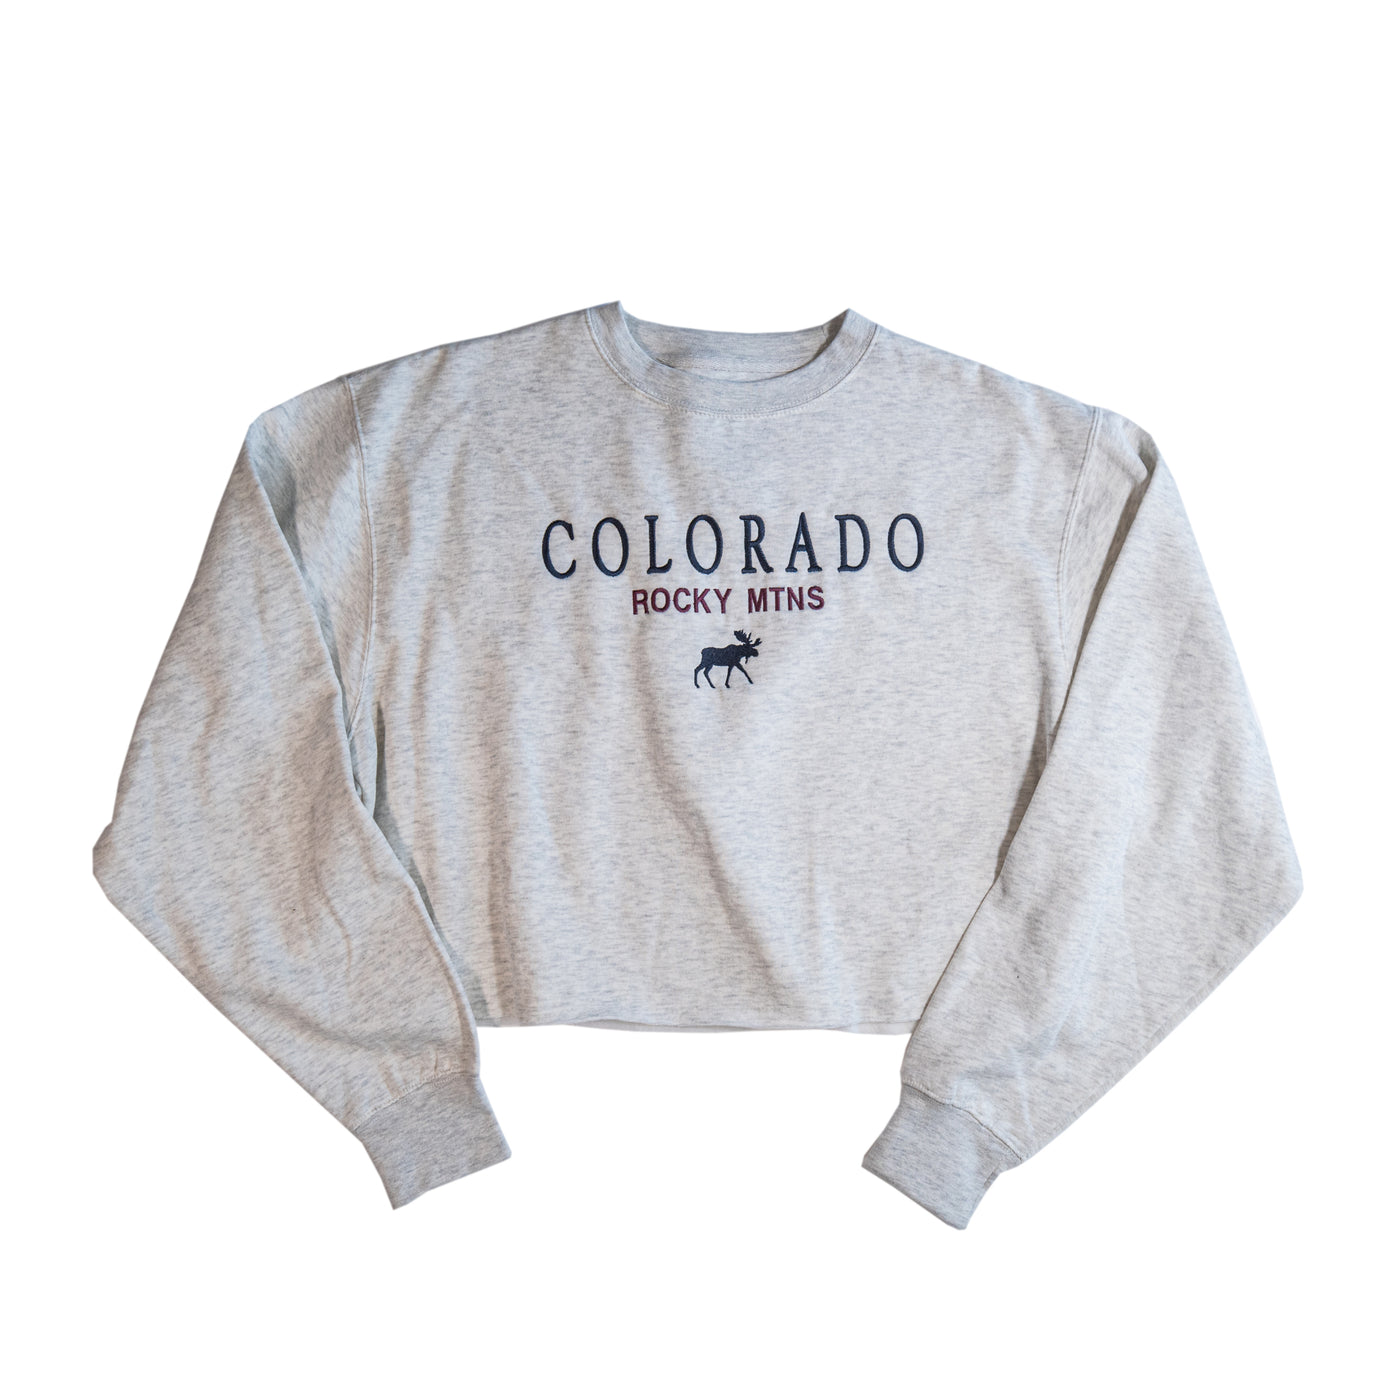 Connive Embroidered Moose Colorado Cropped Crew Neck Sweatshirt